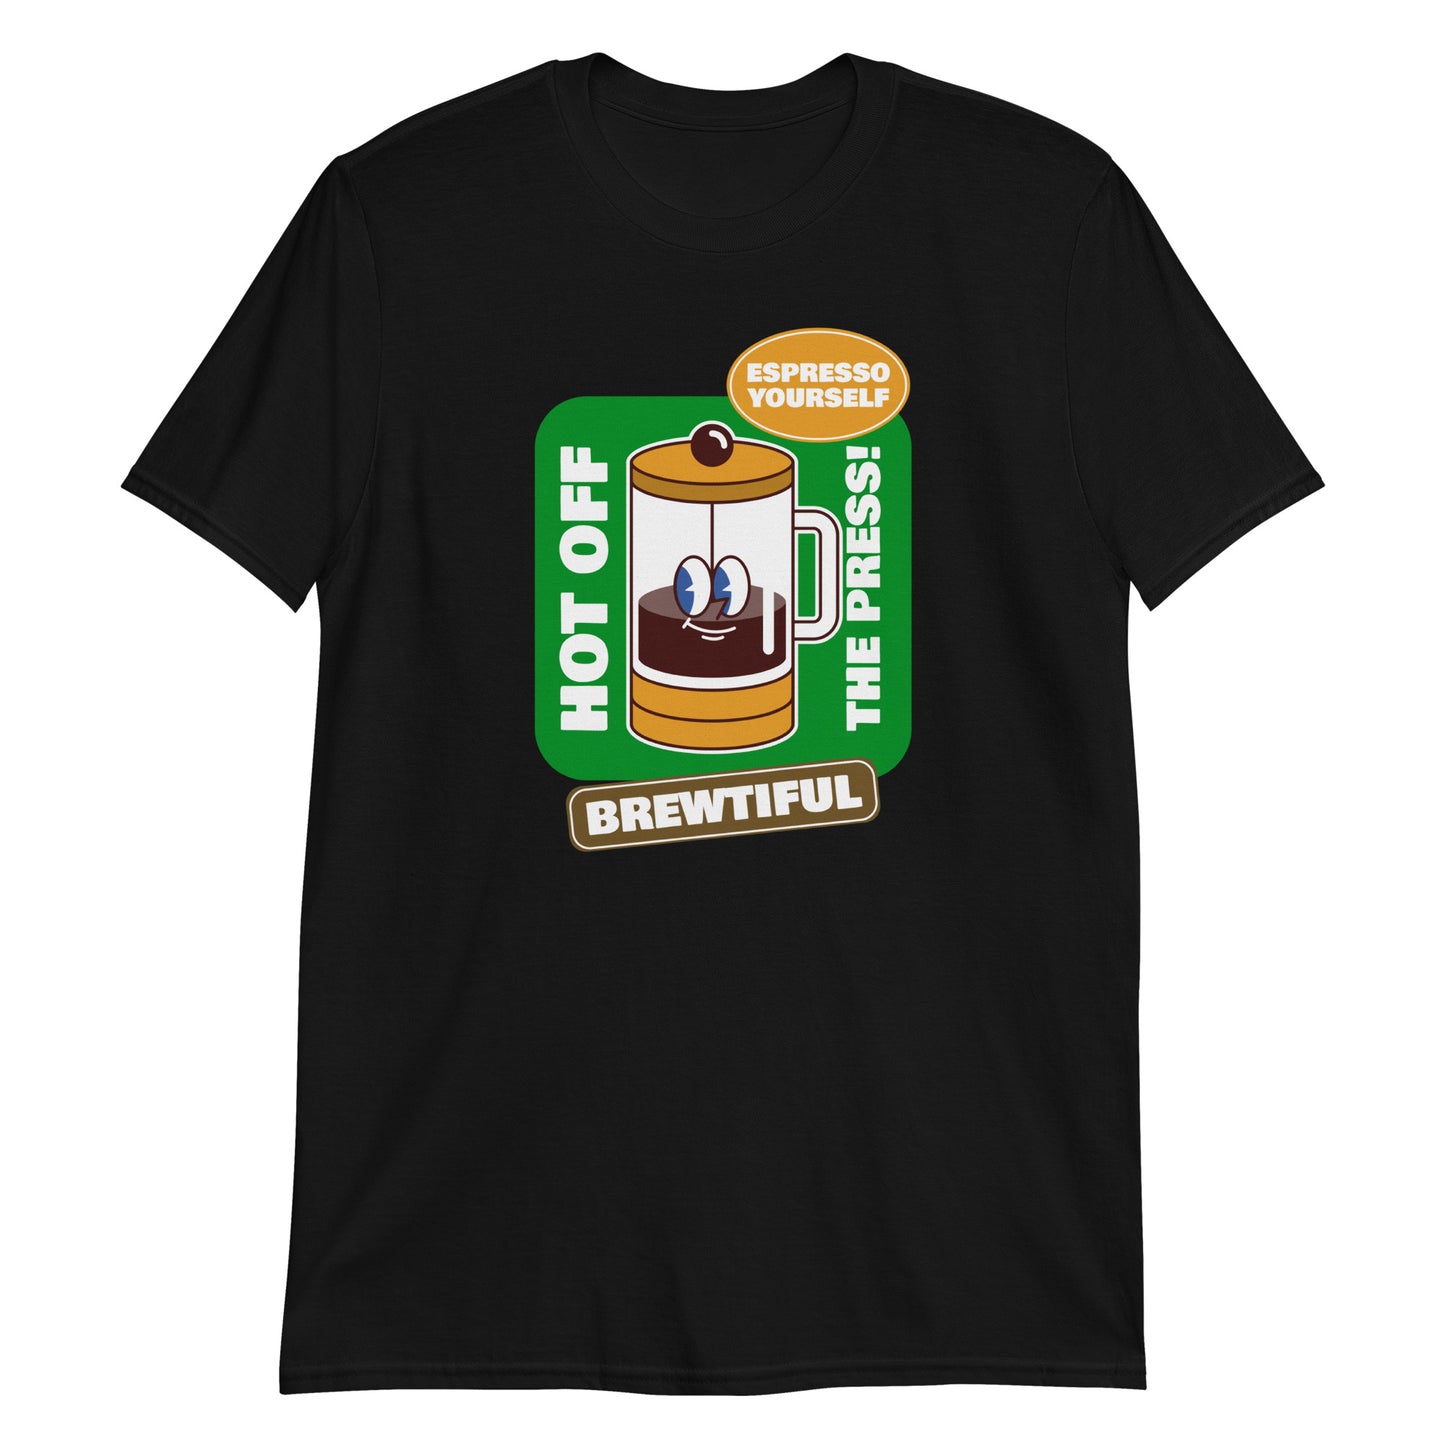 Brewtiful - Short-Sleeve Unisex T-Shirt Black Unisex T-shirt Coffee